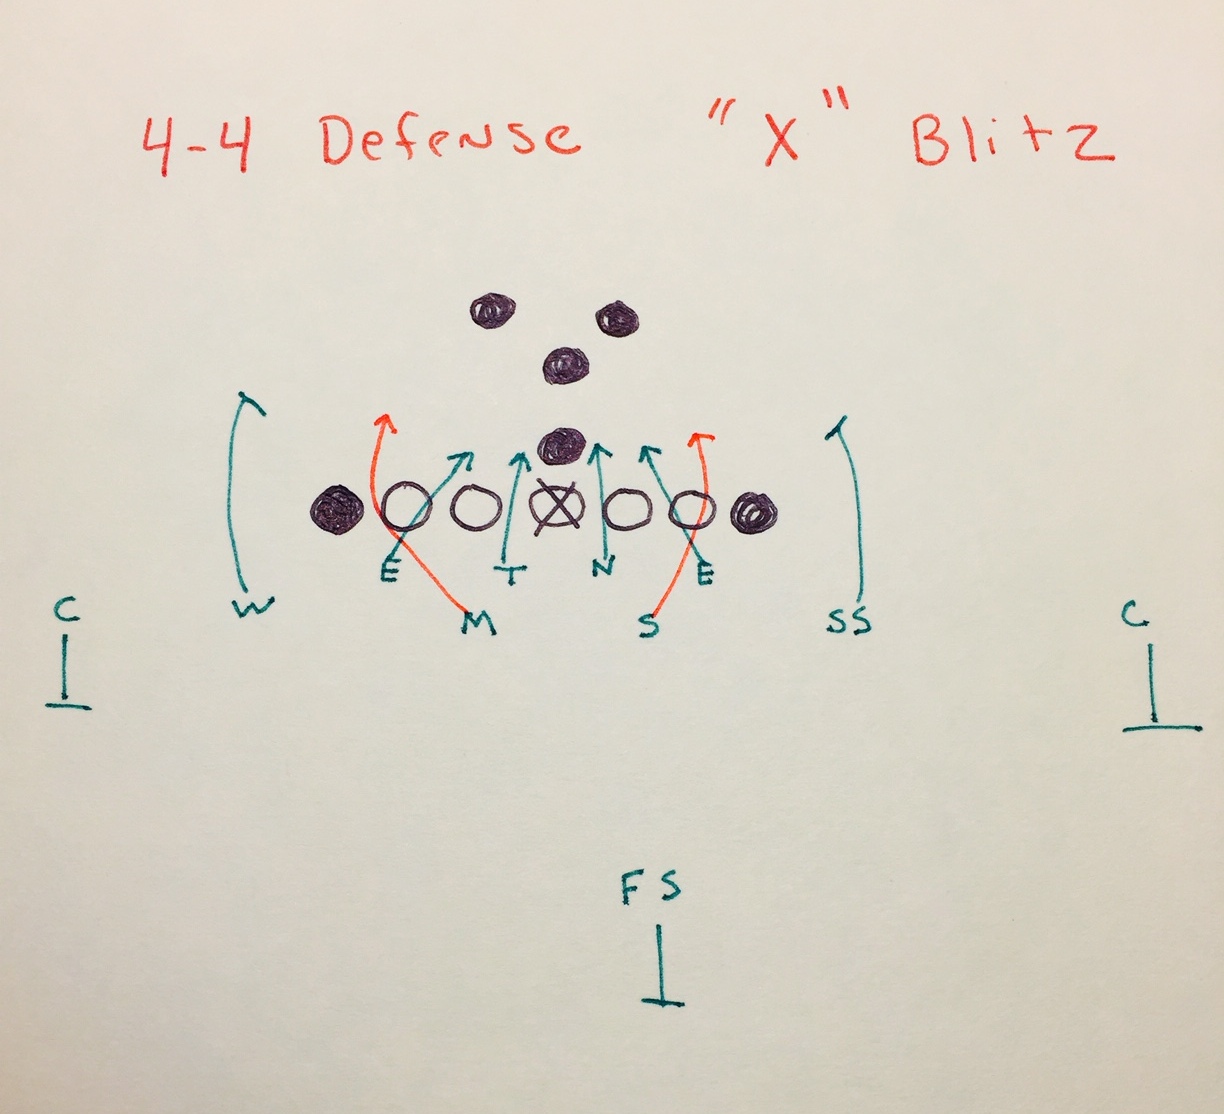 “X” Blitz- 44 Defense